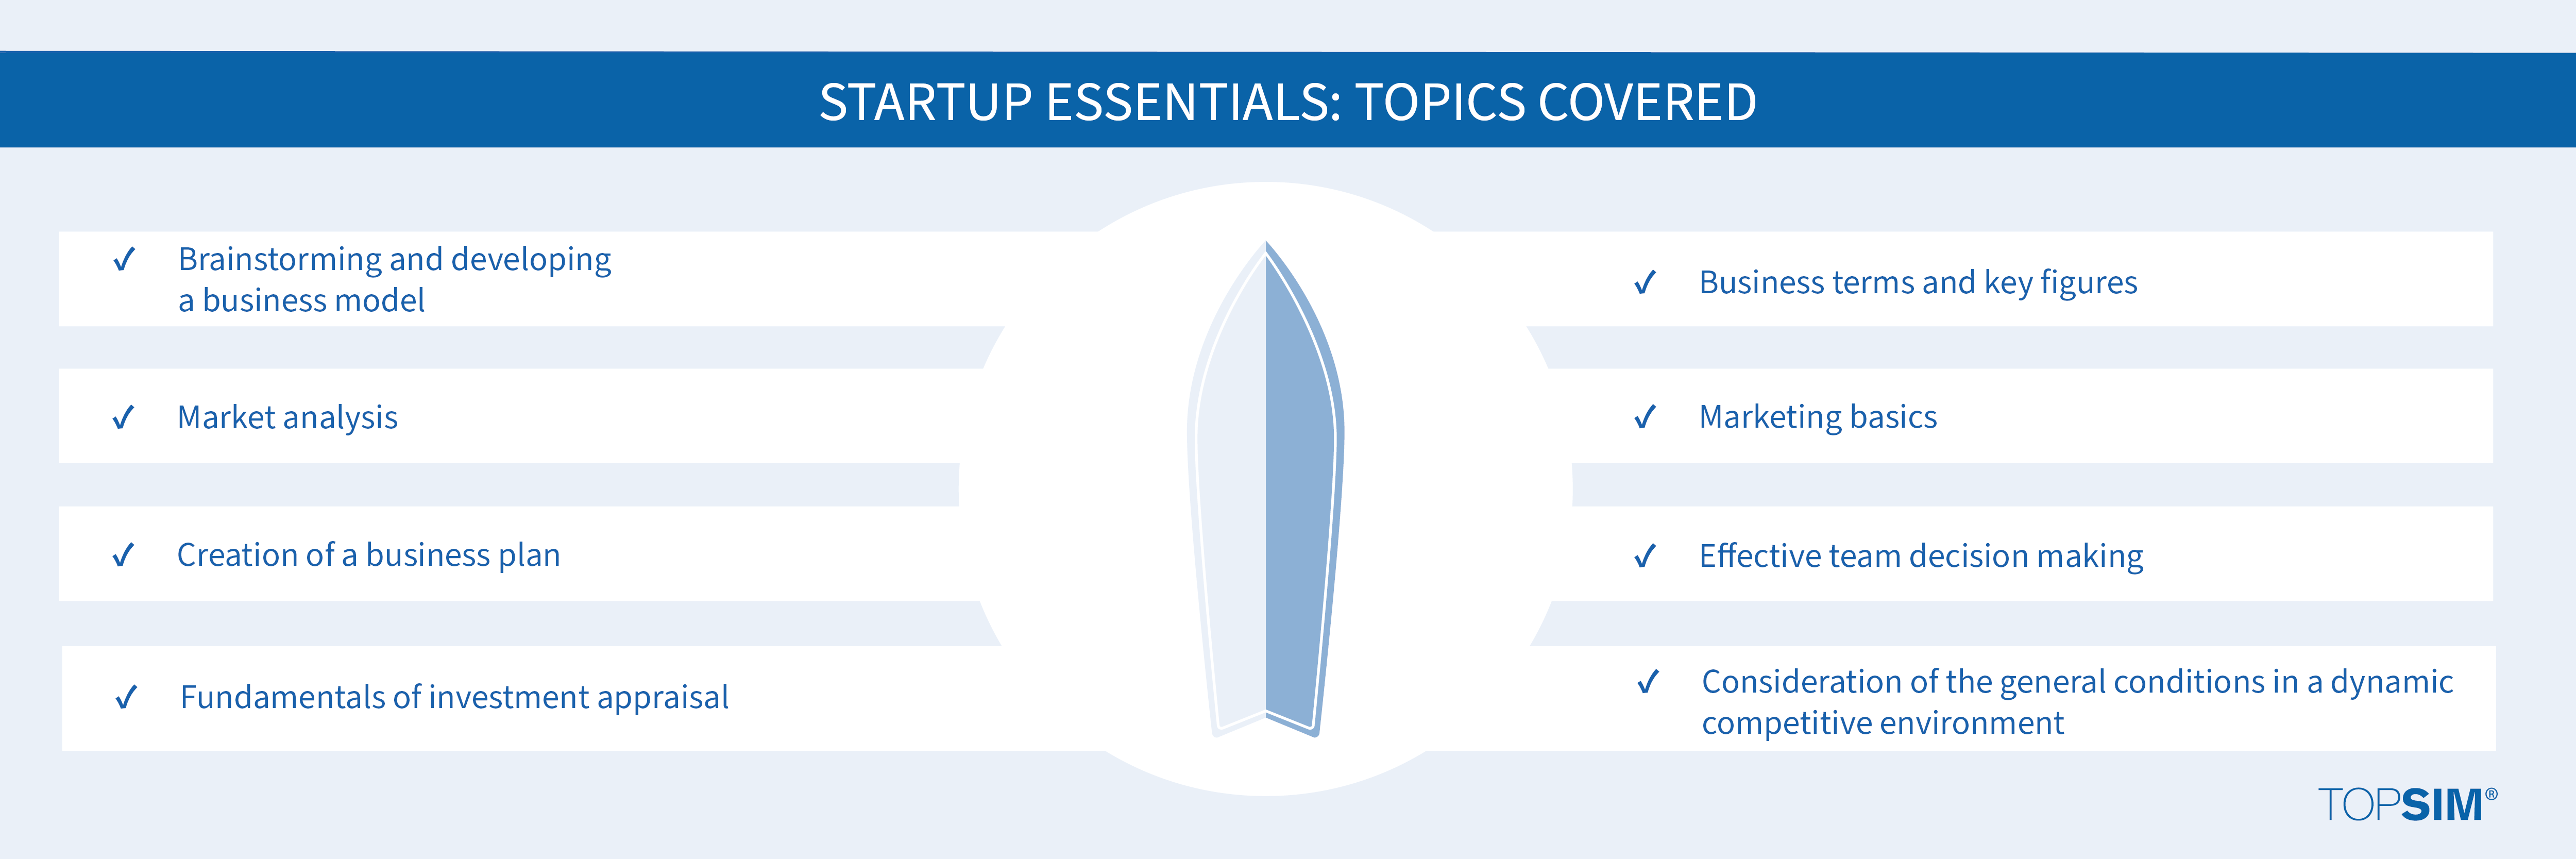 Topics covered: Startup Essentials